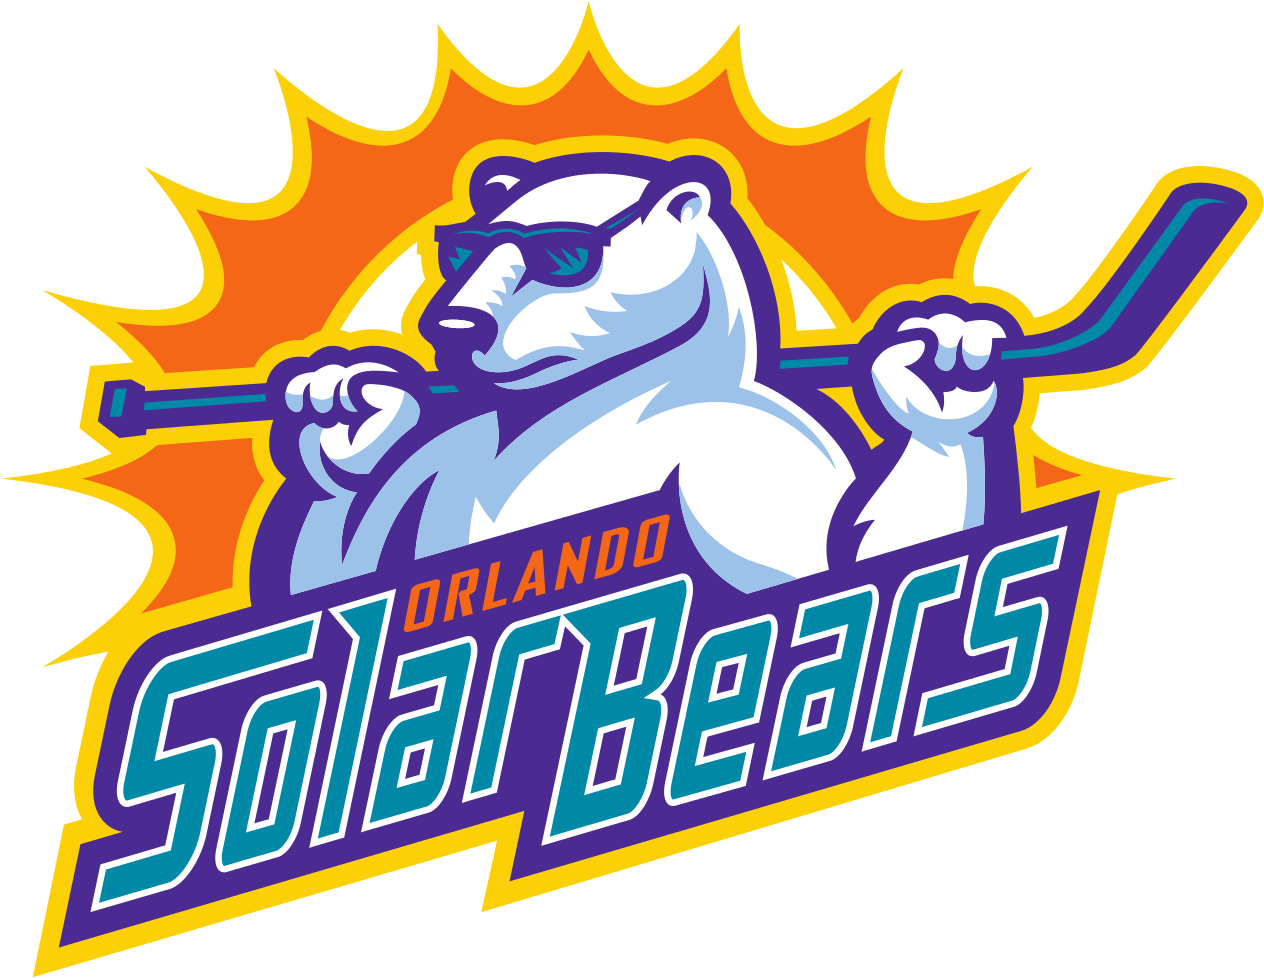 Versus Orlando Solar Bears Logo - Orlando Solar Bears (1280x993)